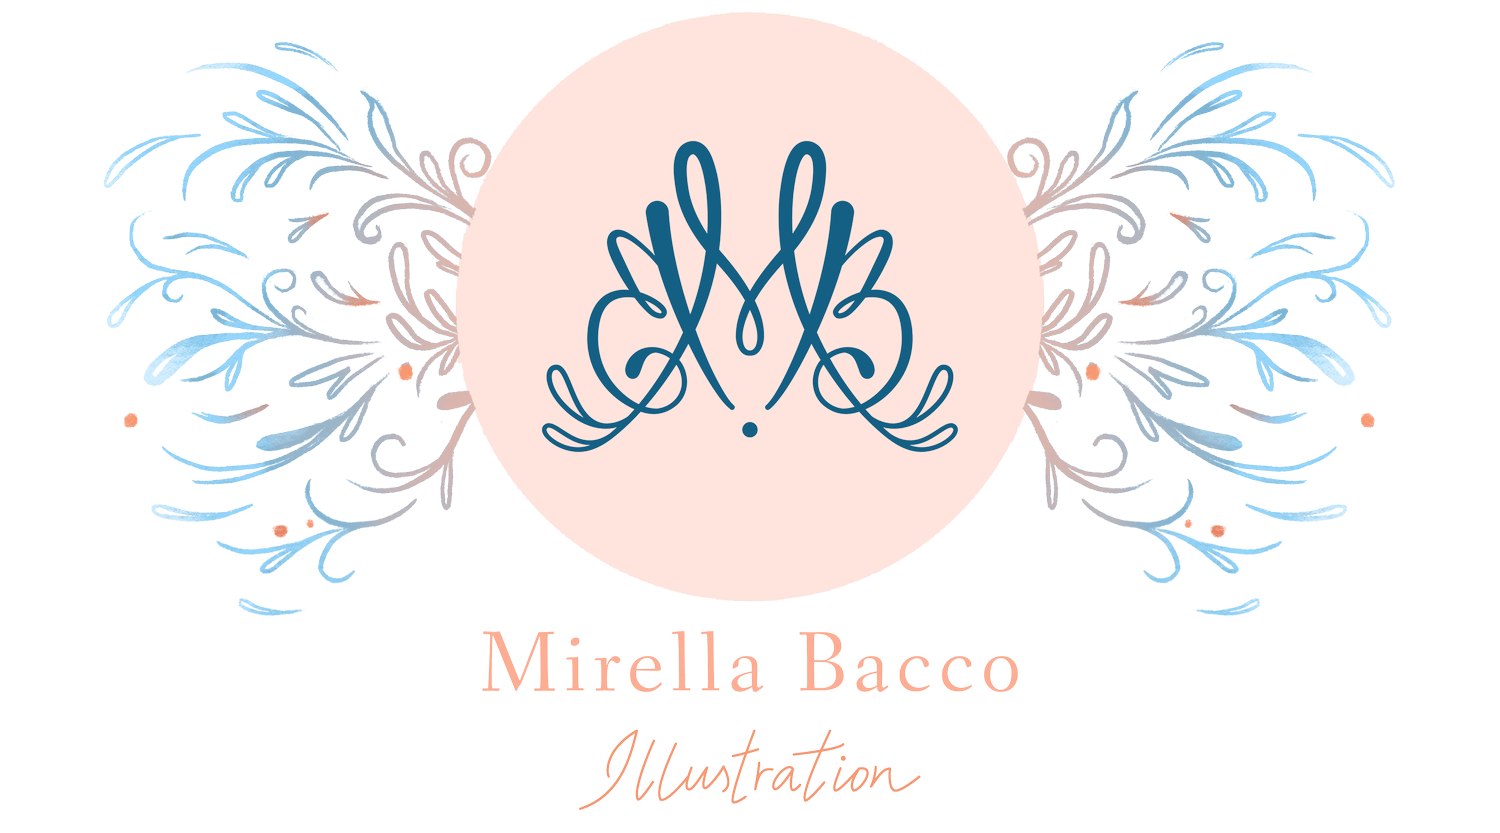 Mirella Bacco